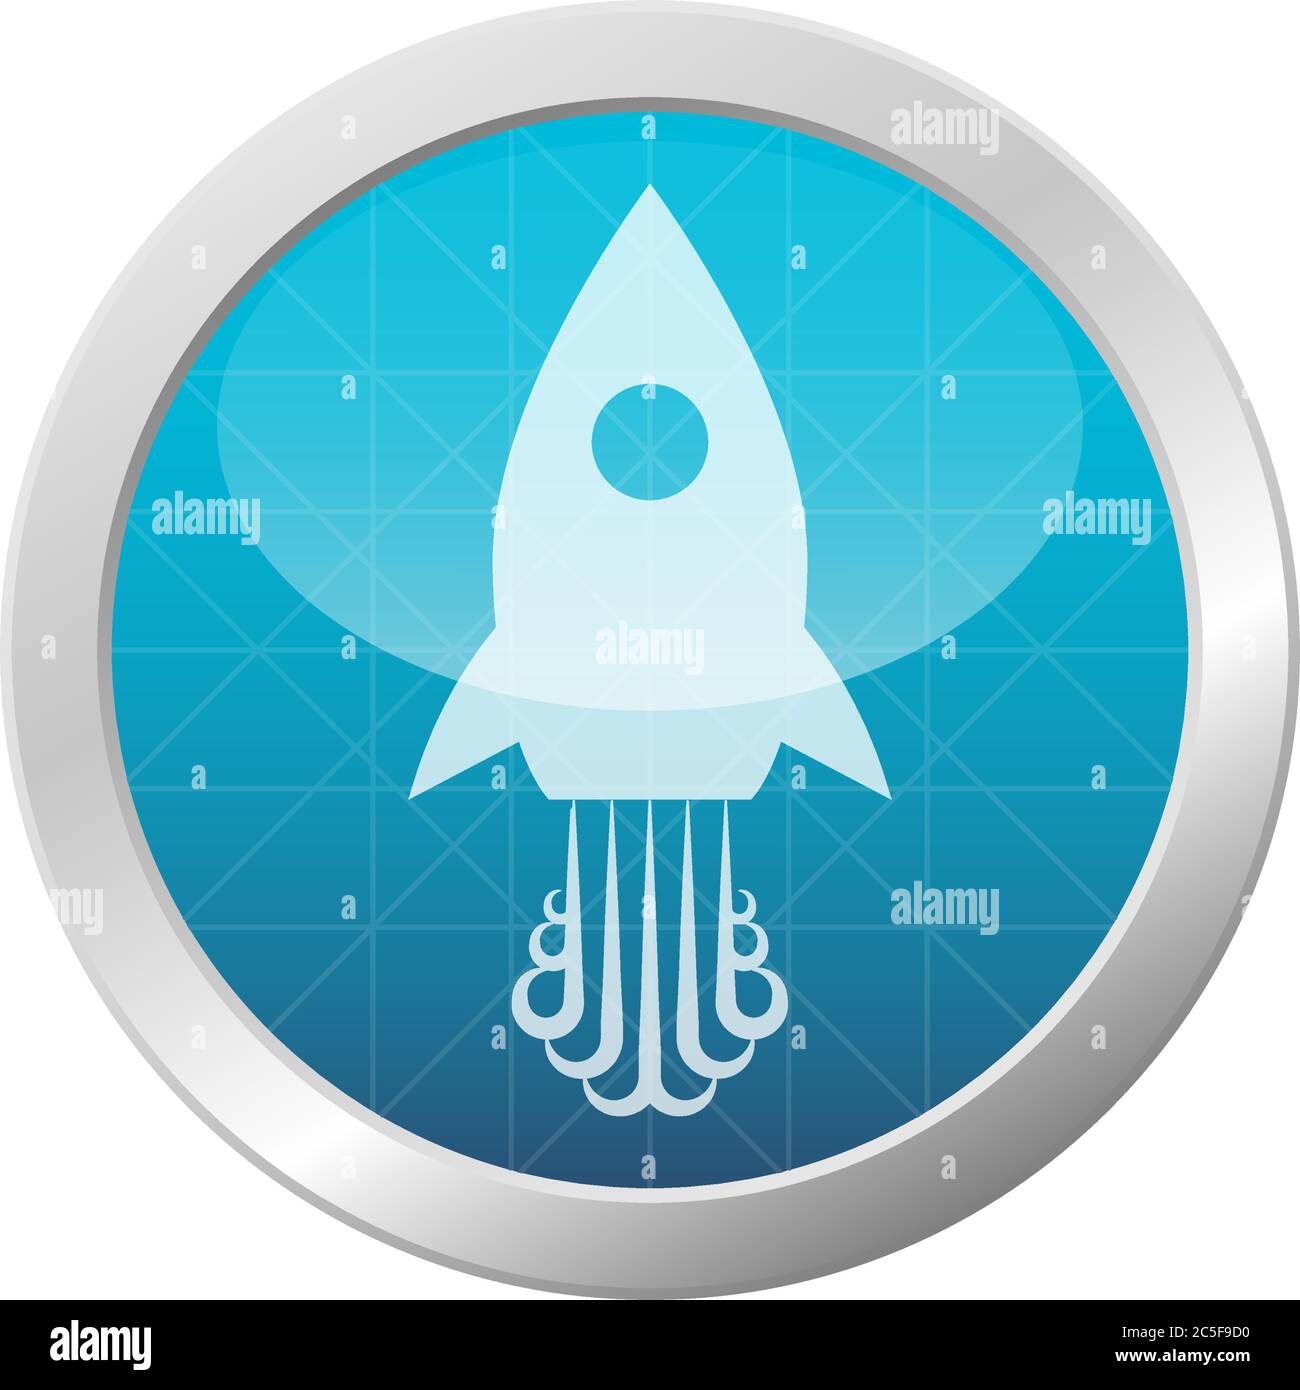 Rakete Symbol Vektor Illustration Raumschiff auf hellblau glänzenden Kreis Rahmen Stock Vektor